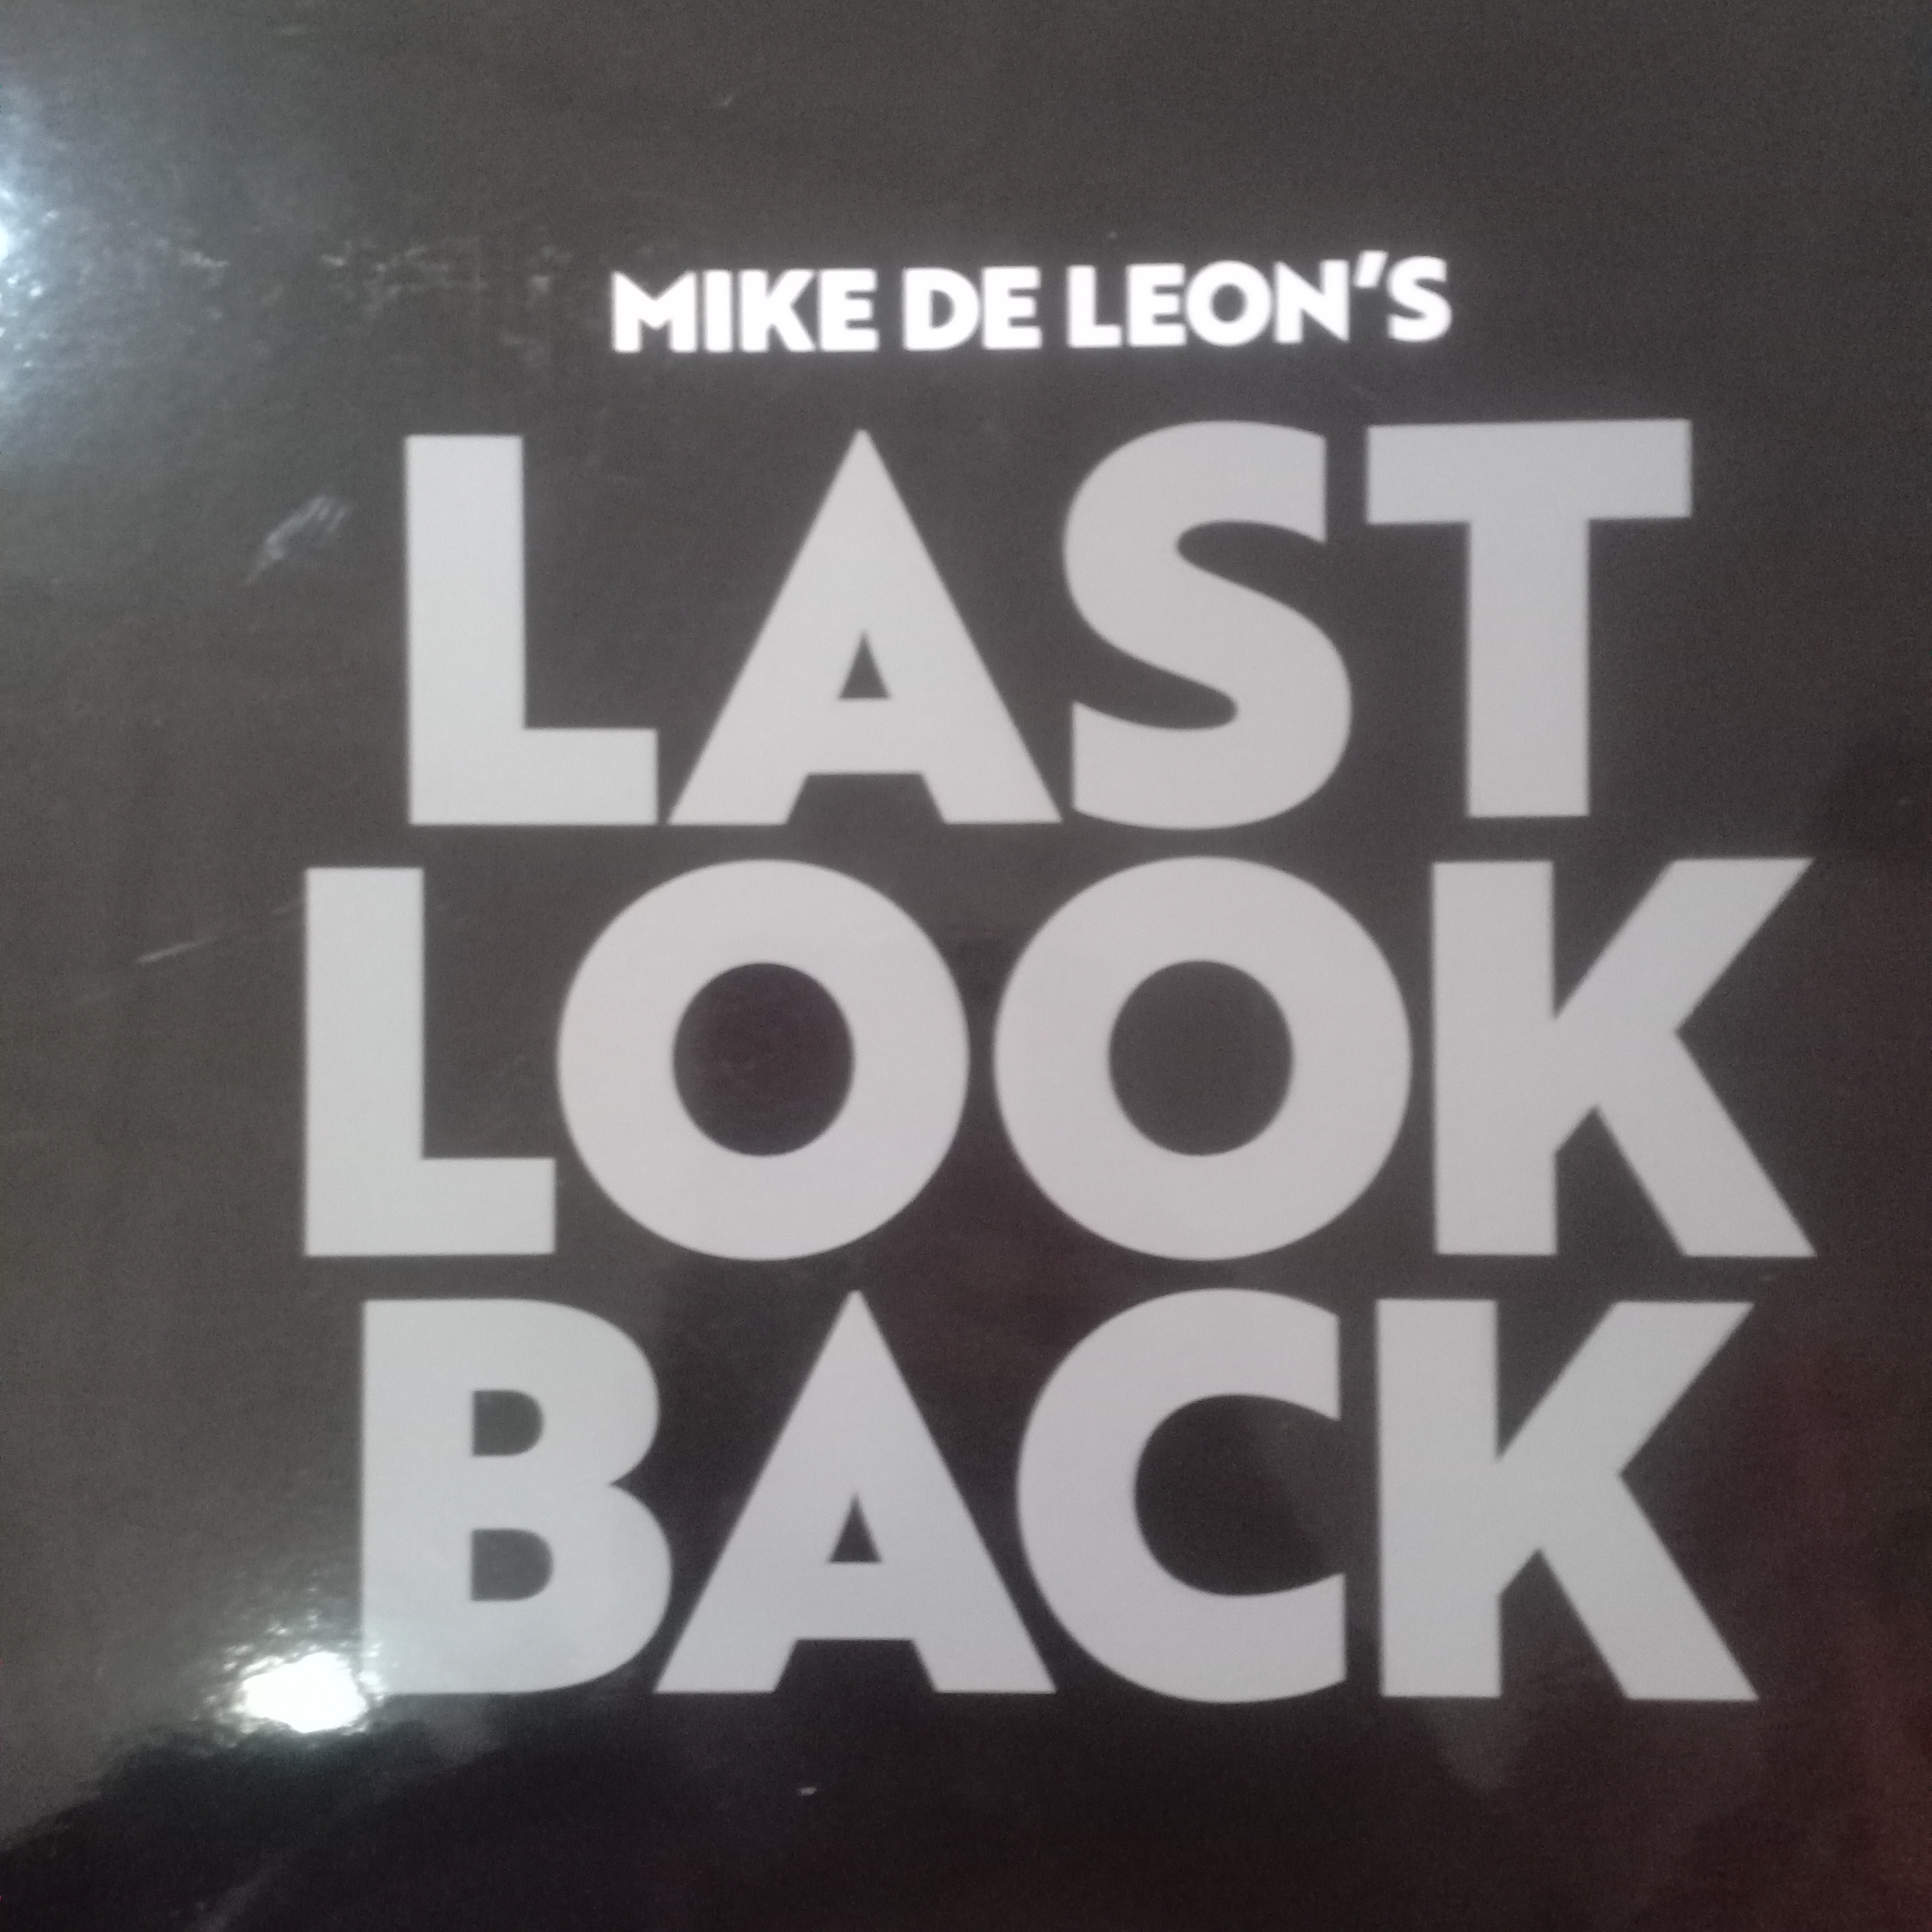 Mike De Leon's last look back